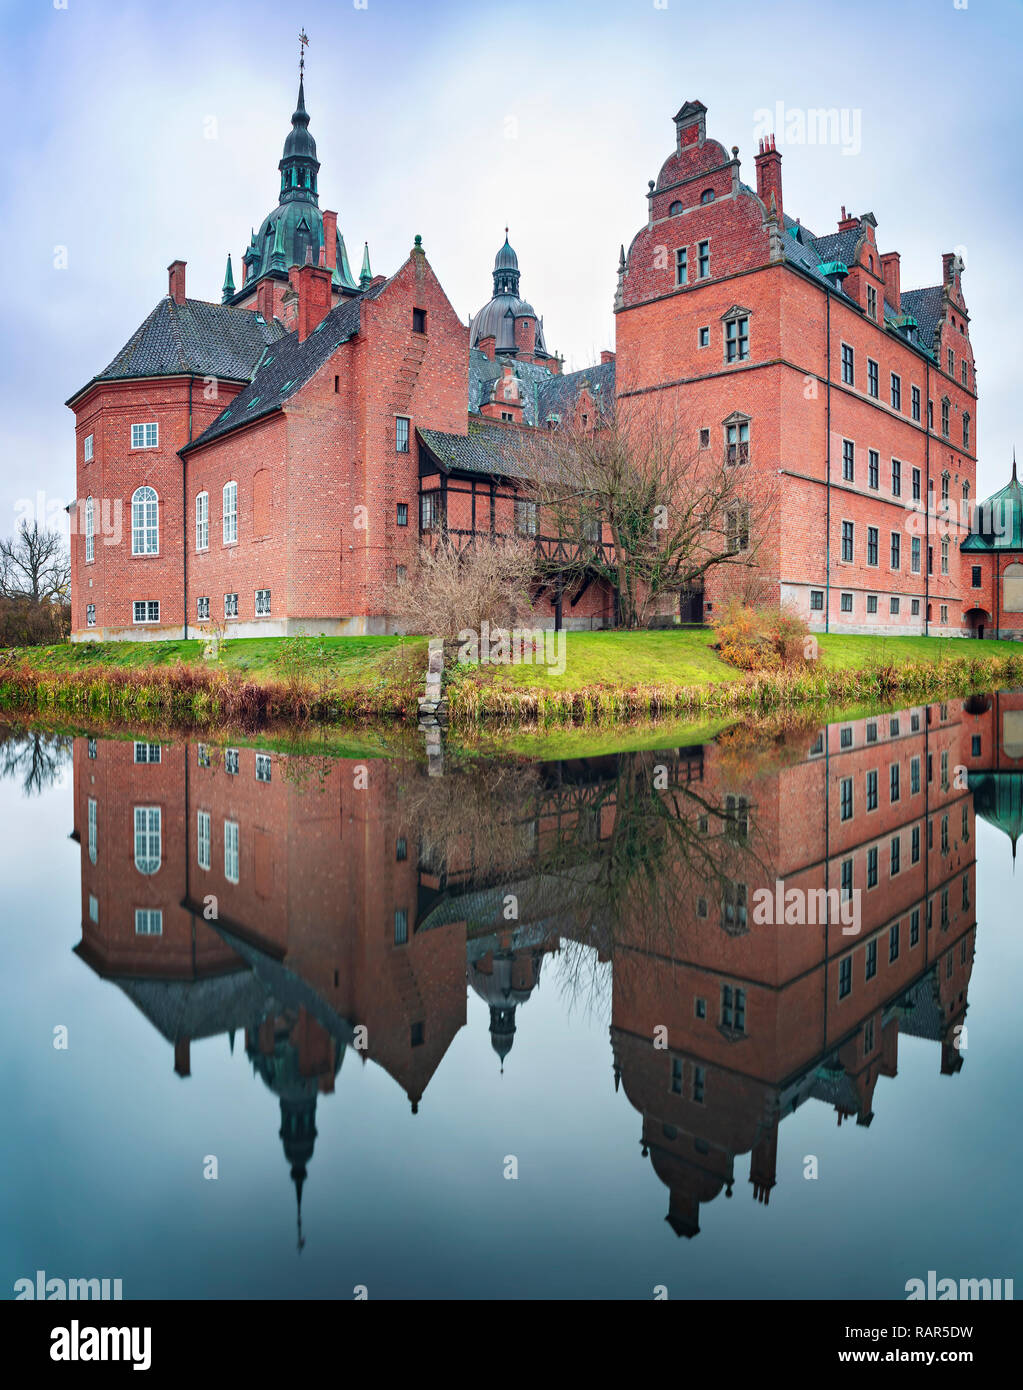 opskrift pasta Slette Denmark Castle Medieval High Resolution Stock Photography and Images - Alamy